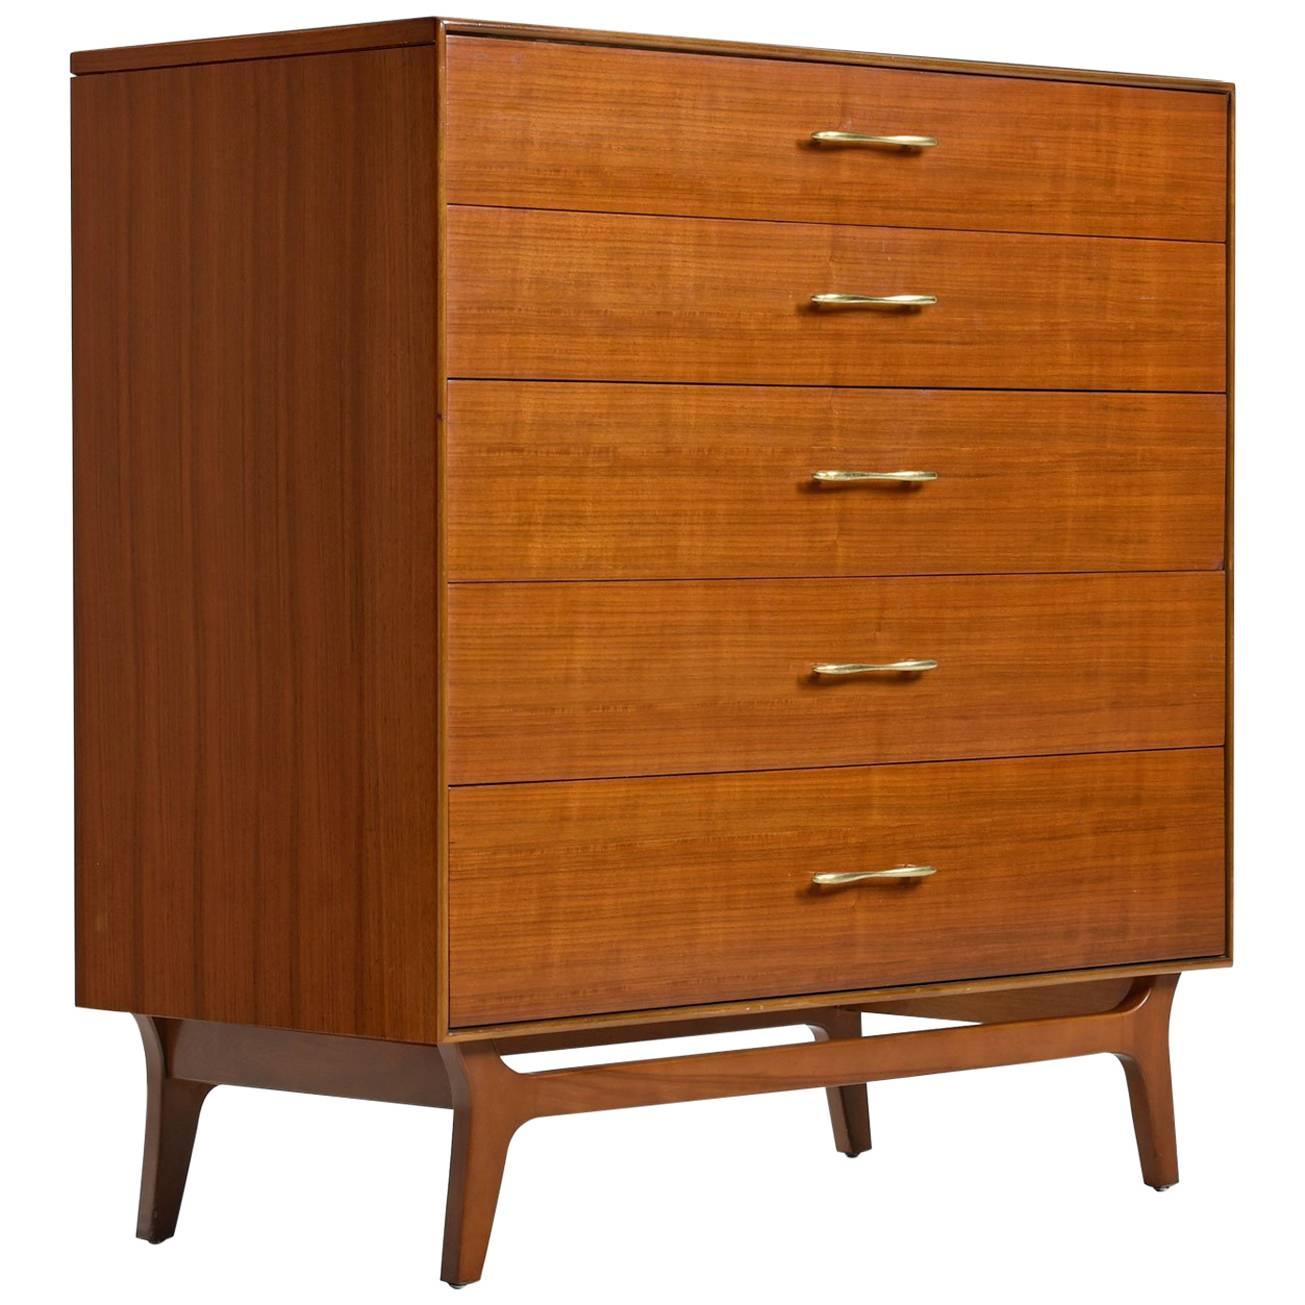 Rway Mid-Century Modern Walnut Chest of Drawers Highboy Dresser with Brass Pulls